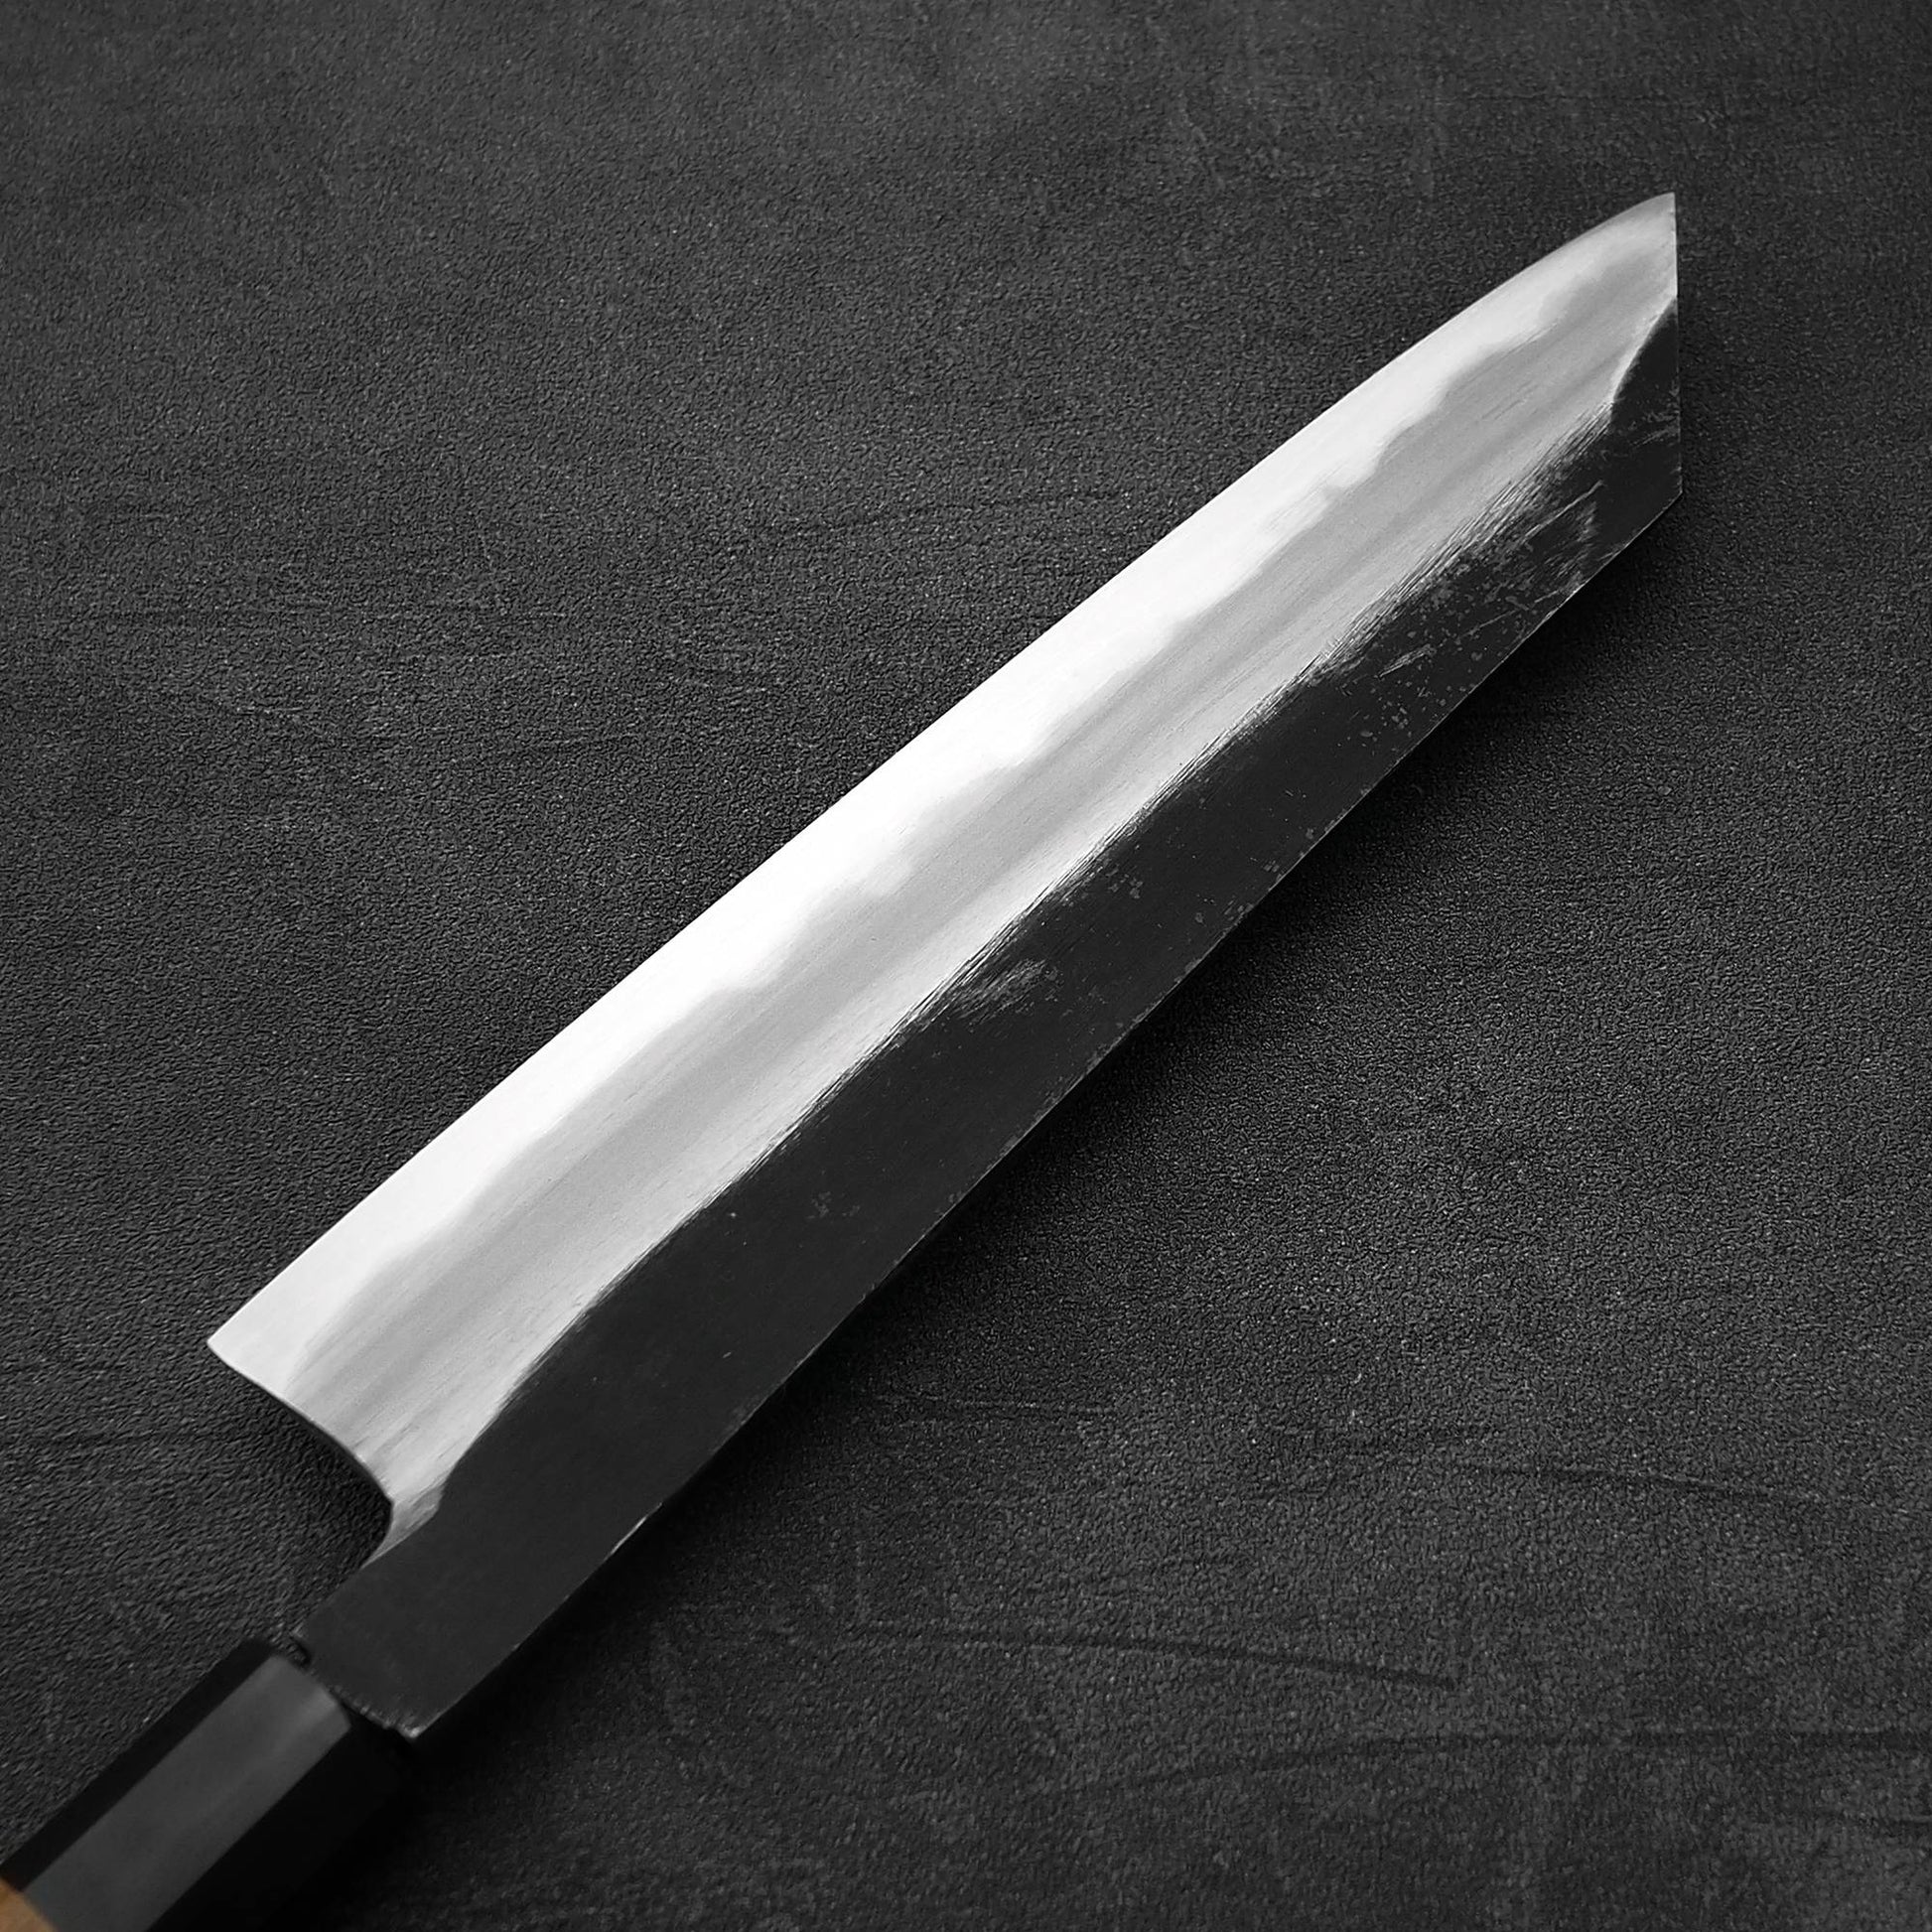 Close up view of the back side of Hatsukokoro Yoake kurouchi aogami#1 kiritsuke gyuto knife